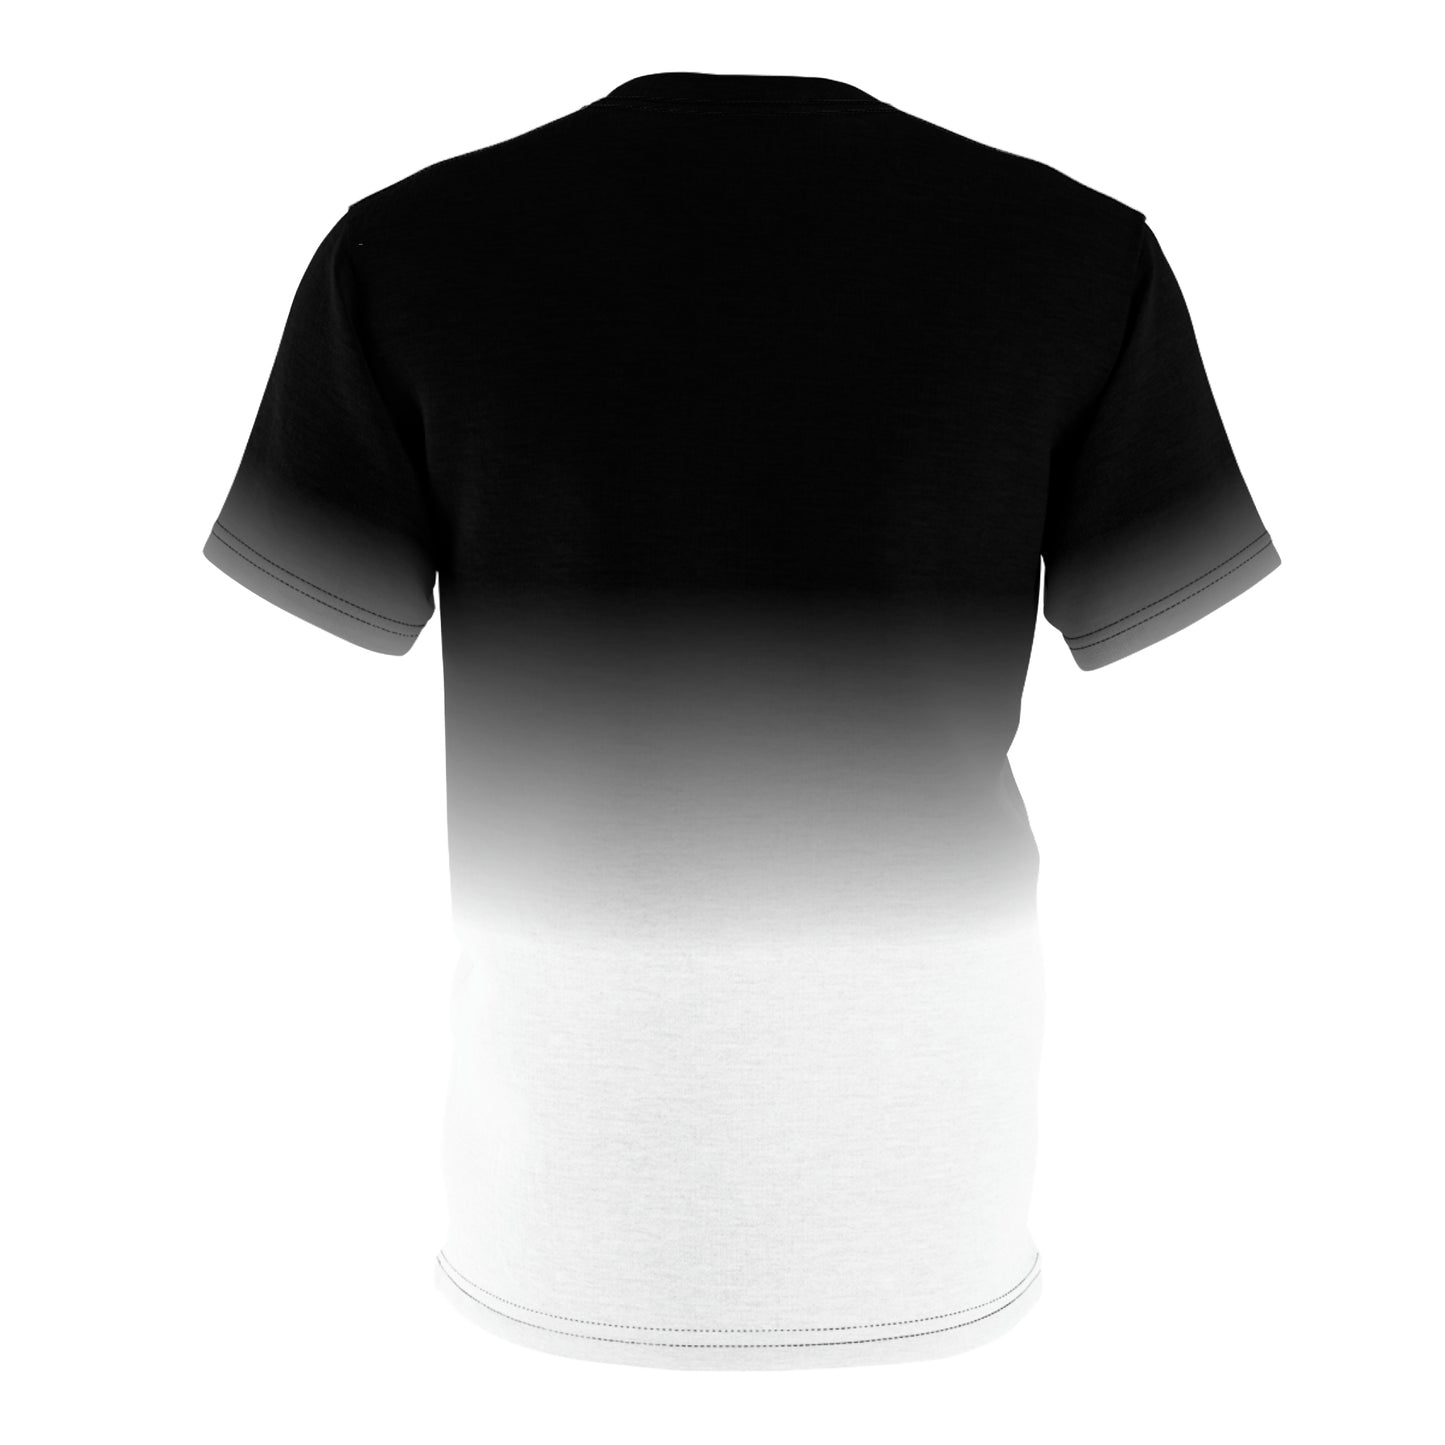 Black White Ombre Tshirt, Gradient Dip Tie Dye Men Women Adult Aesthetic Crewneck Designer Tee Short Sleeve Shirt Top Starcove Fashion